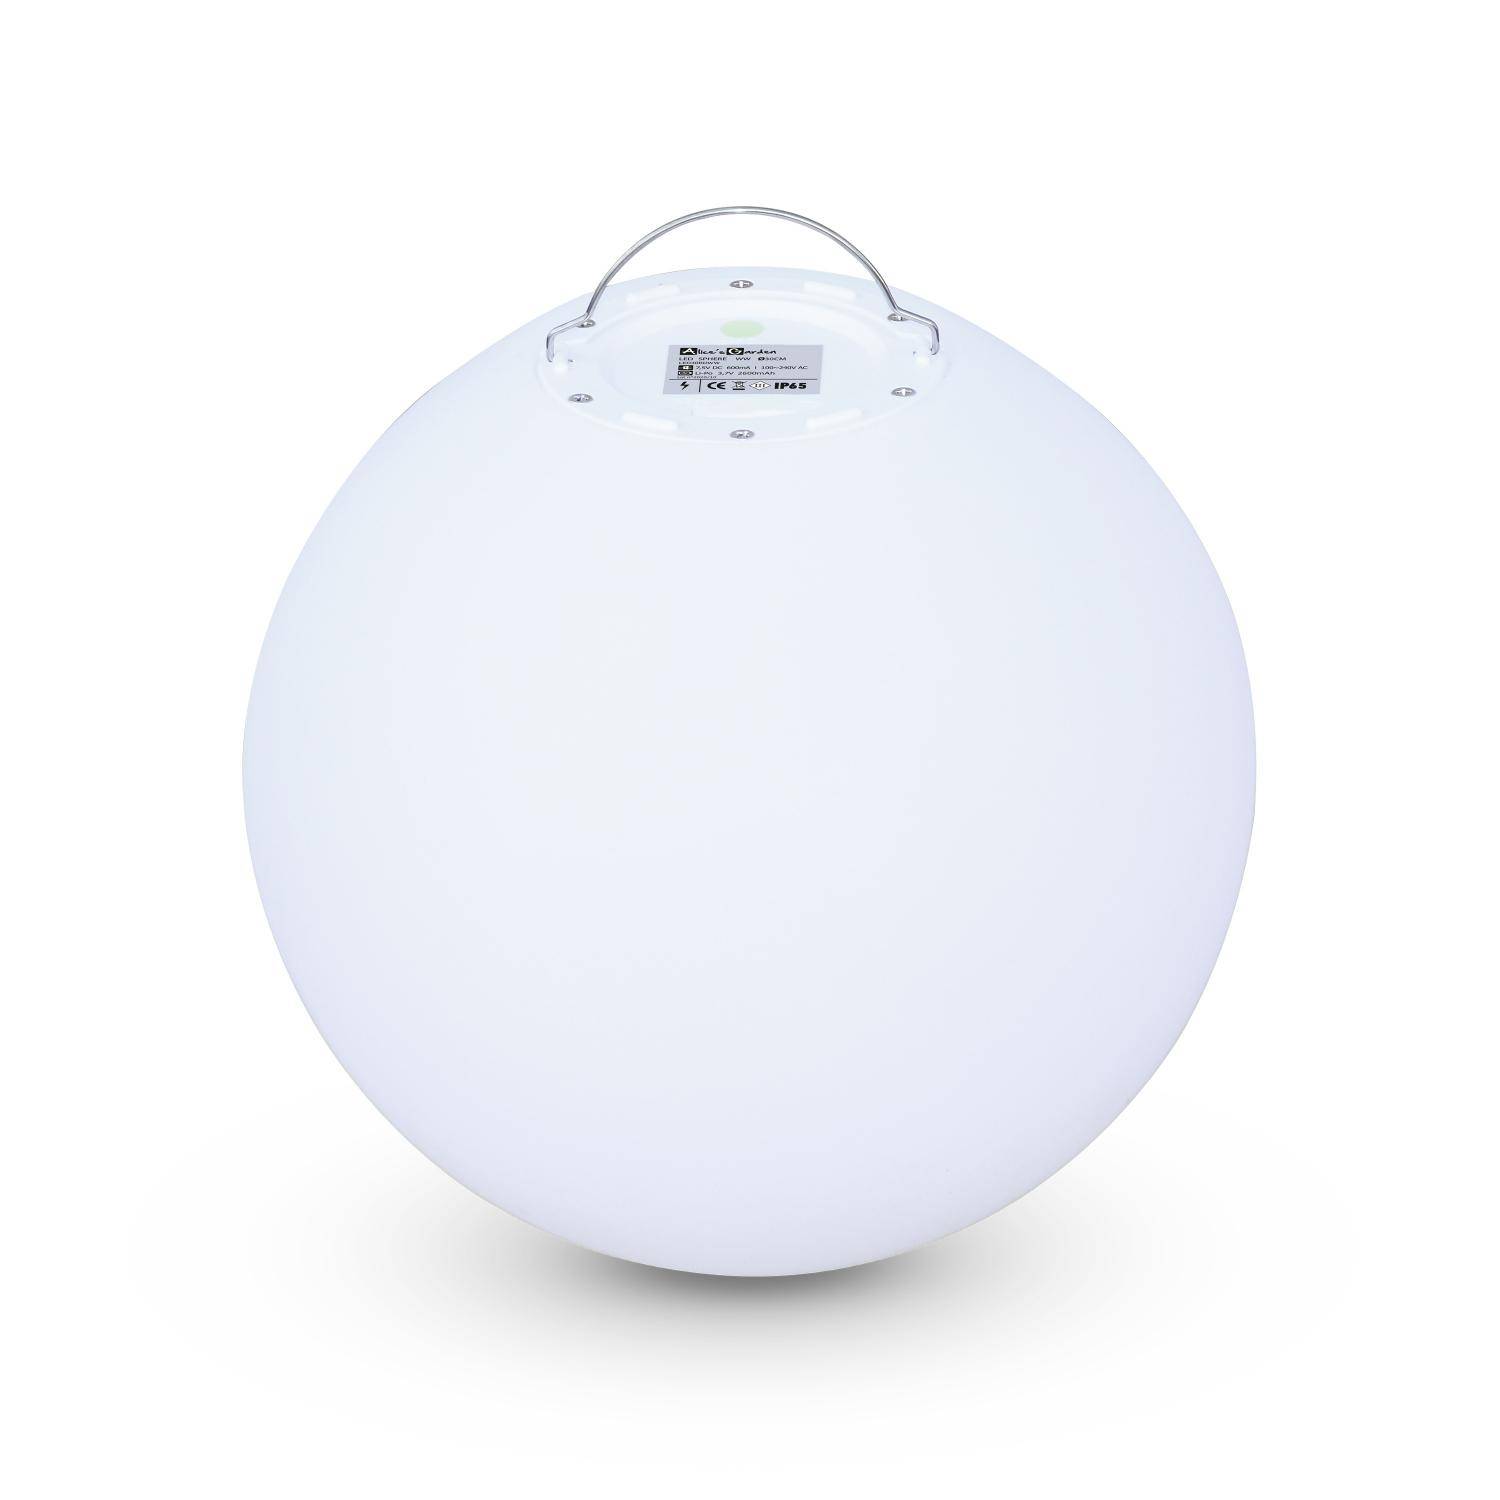 30cm spherical LED lamp – Decorative light sphere, remote control, Warm white,sweeek,Photo4